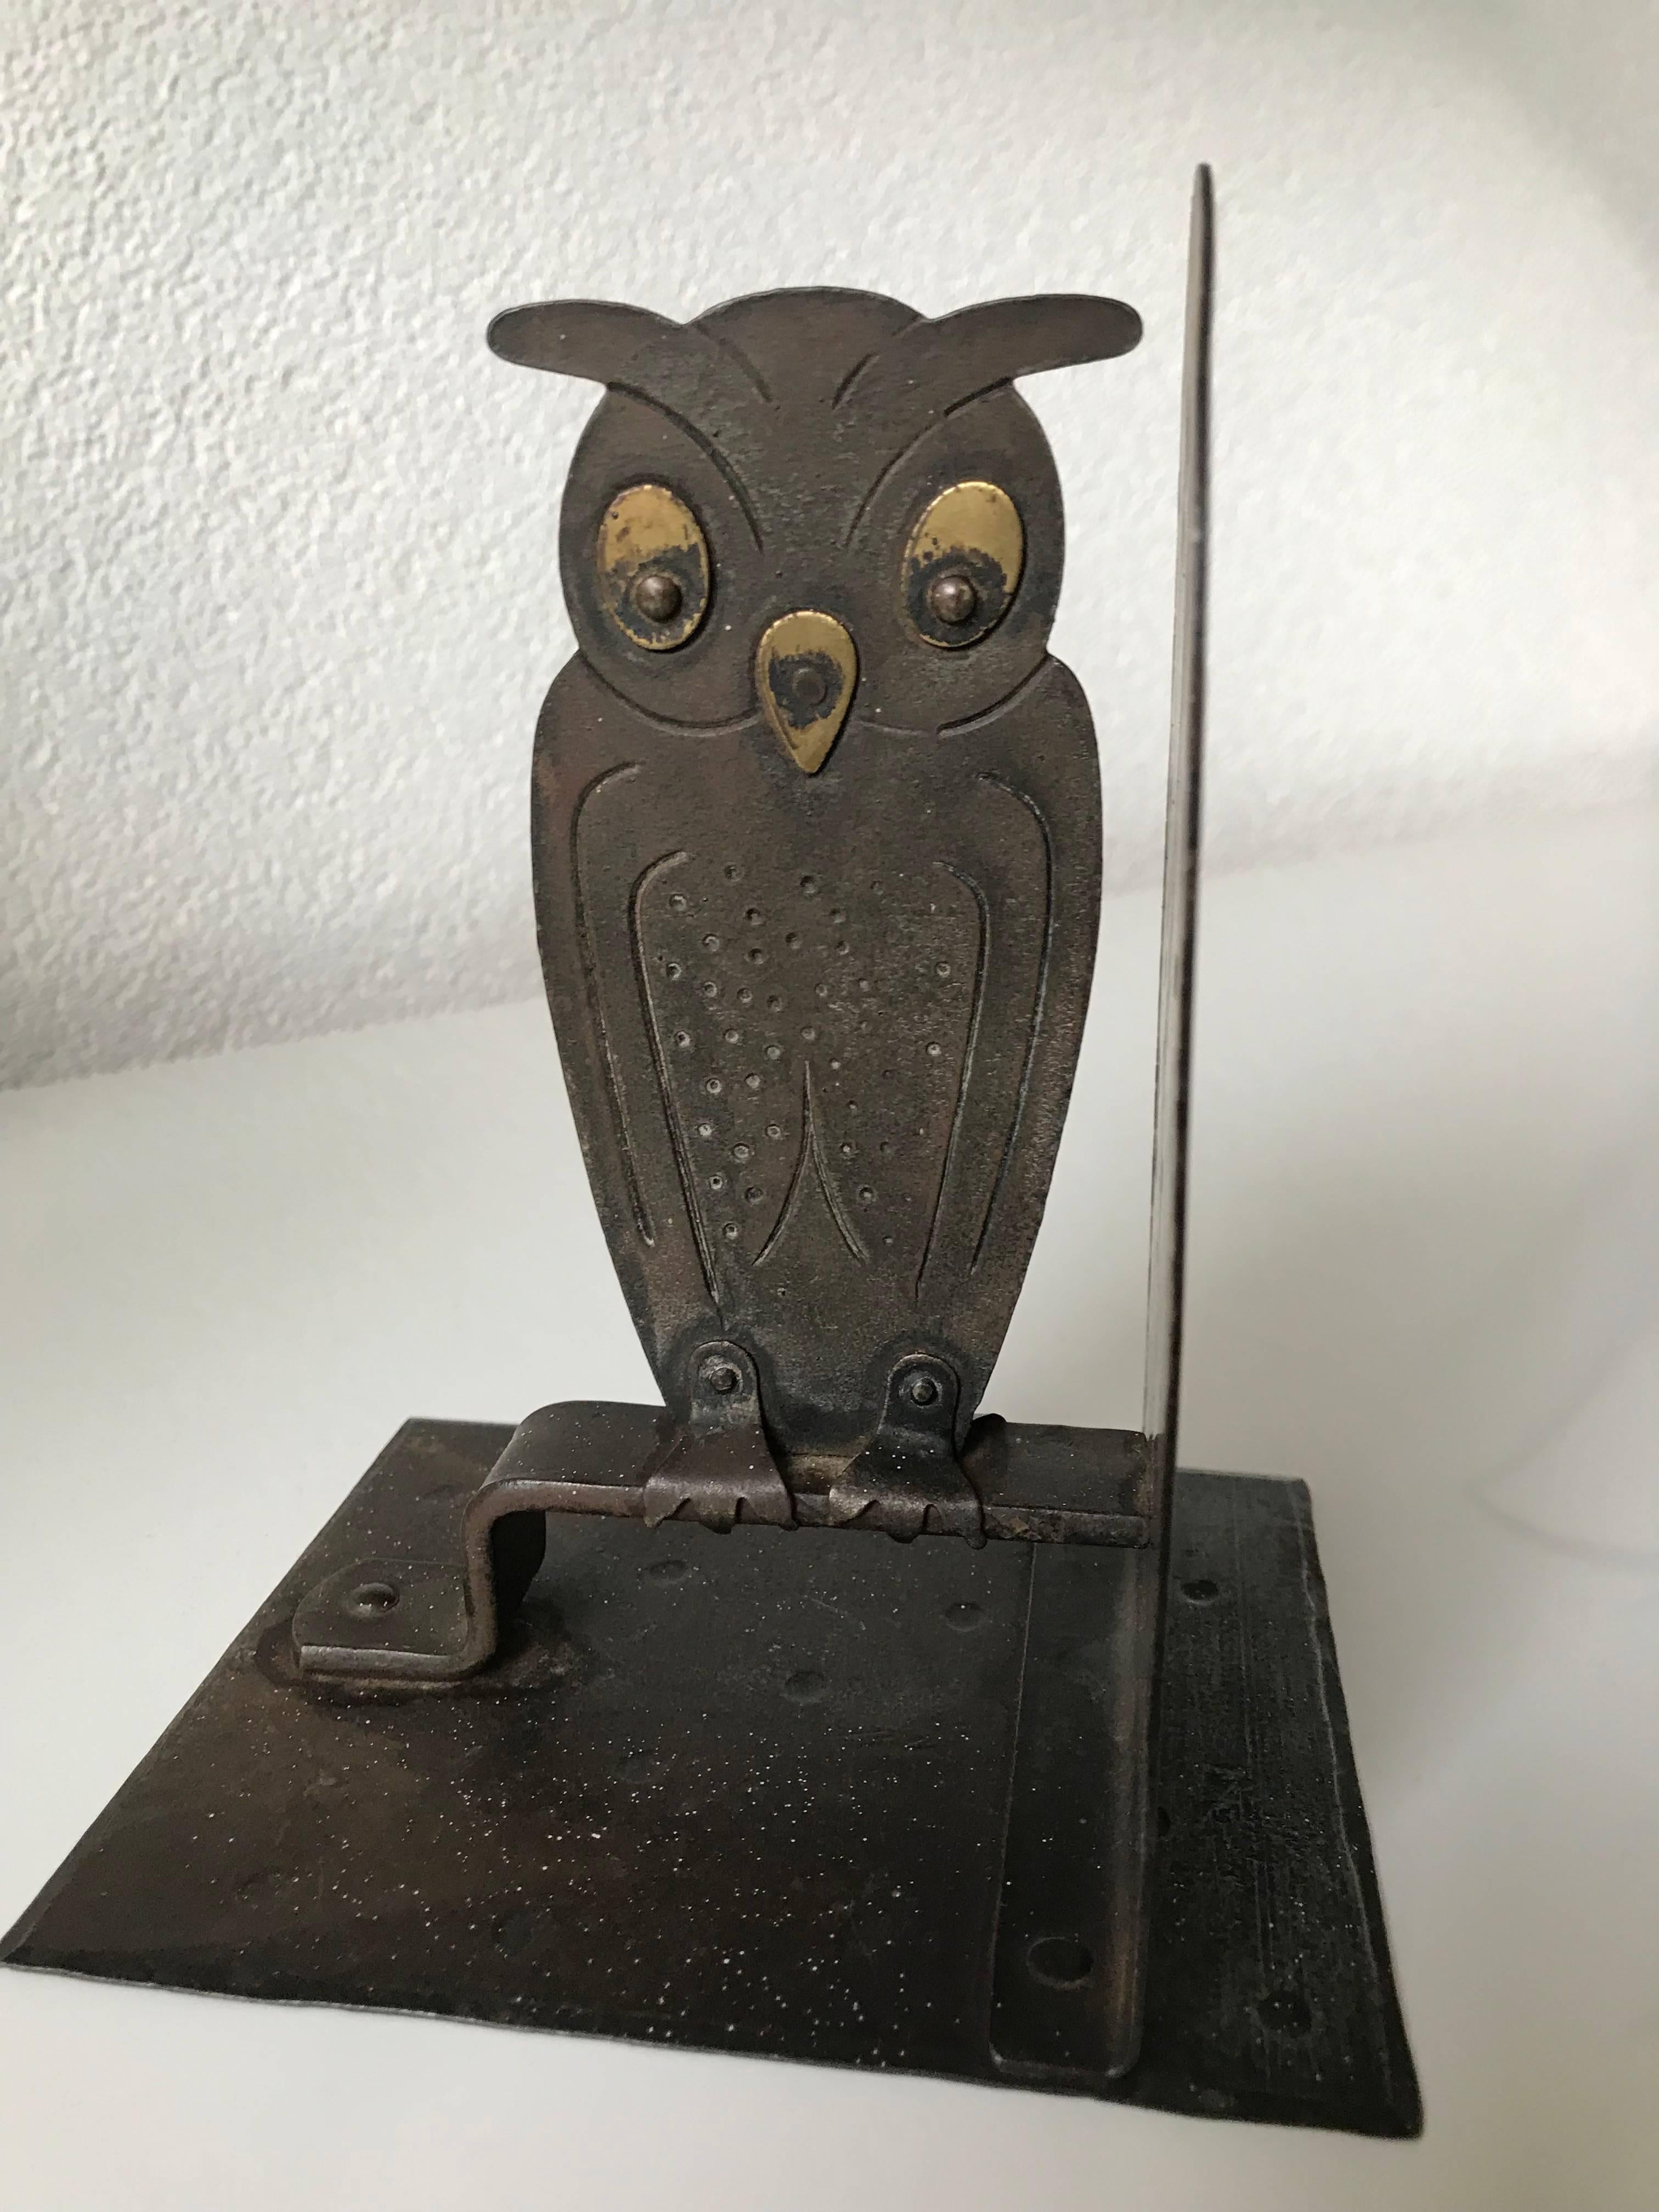 Vintage 1920s Hammered Metal Owl Bookend by Goberg, Hugo Berger, Germany 1